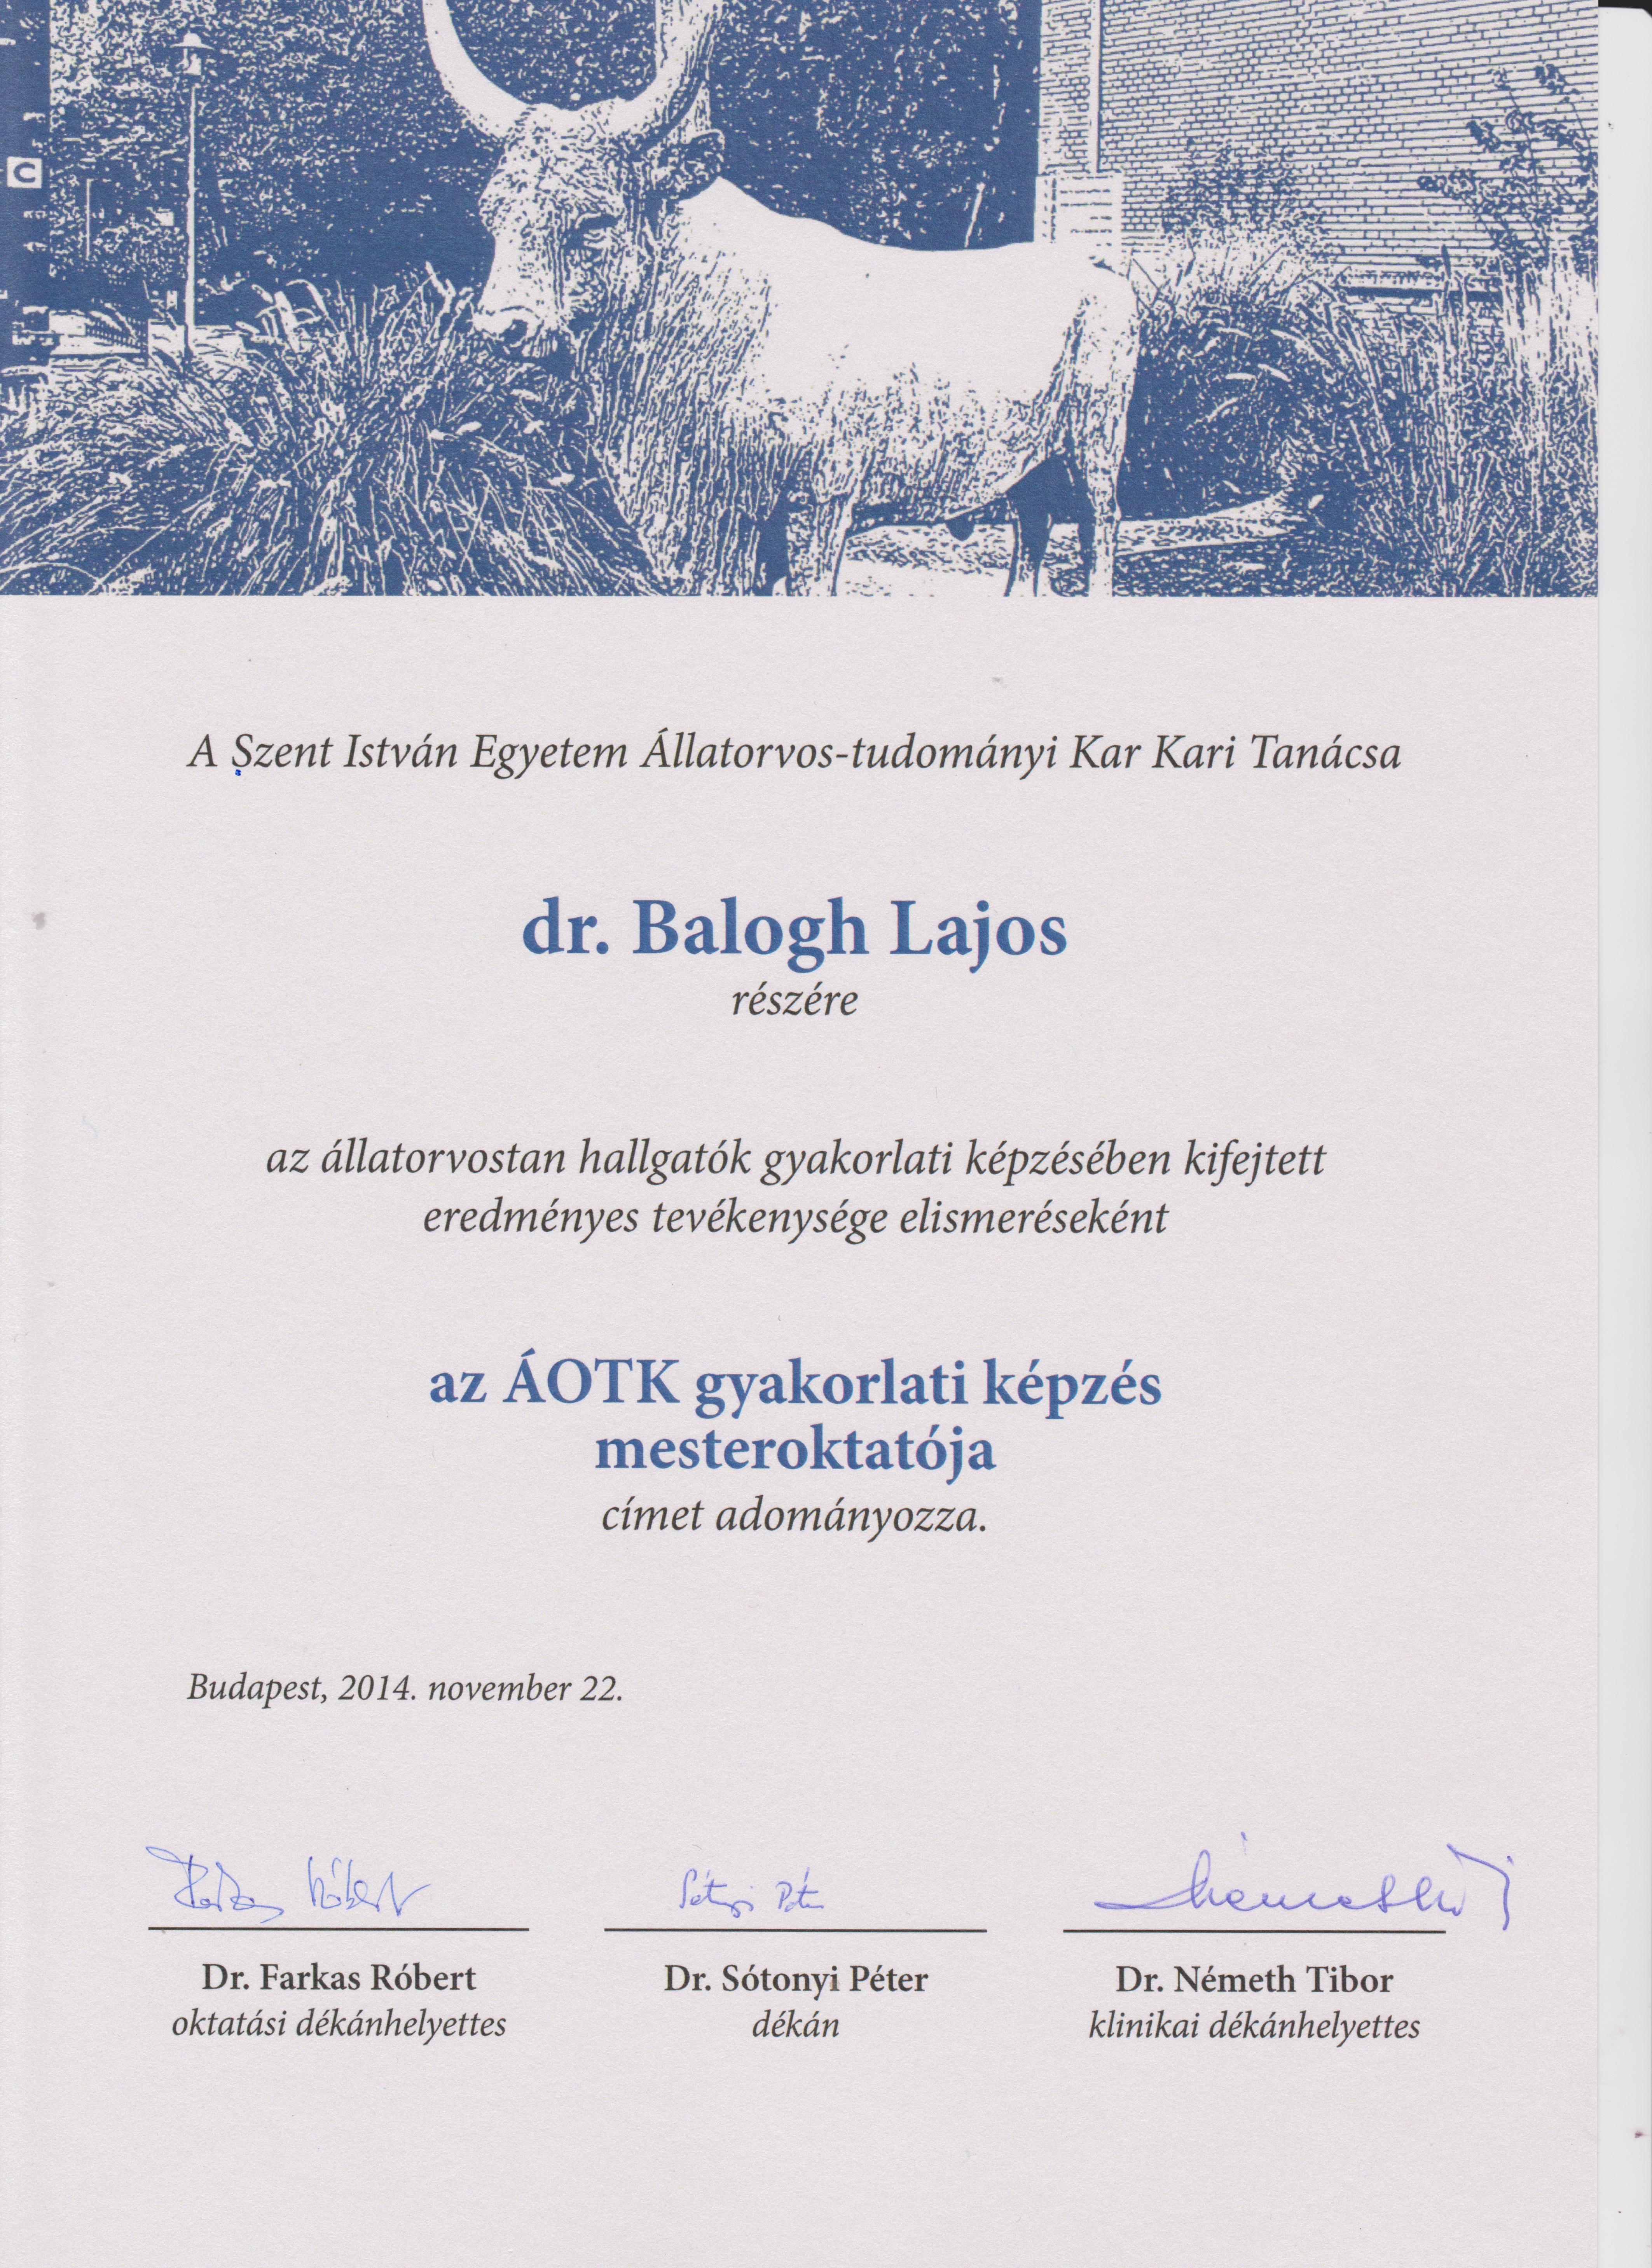 Dr. Balogh Lajost mesteroktatóvá nevezték ki.